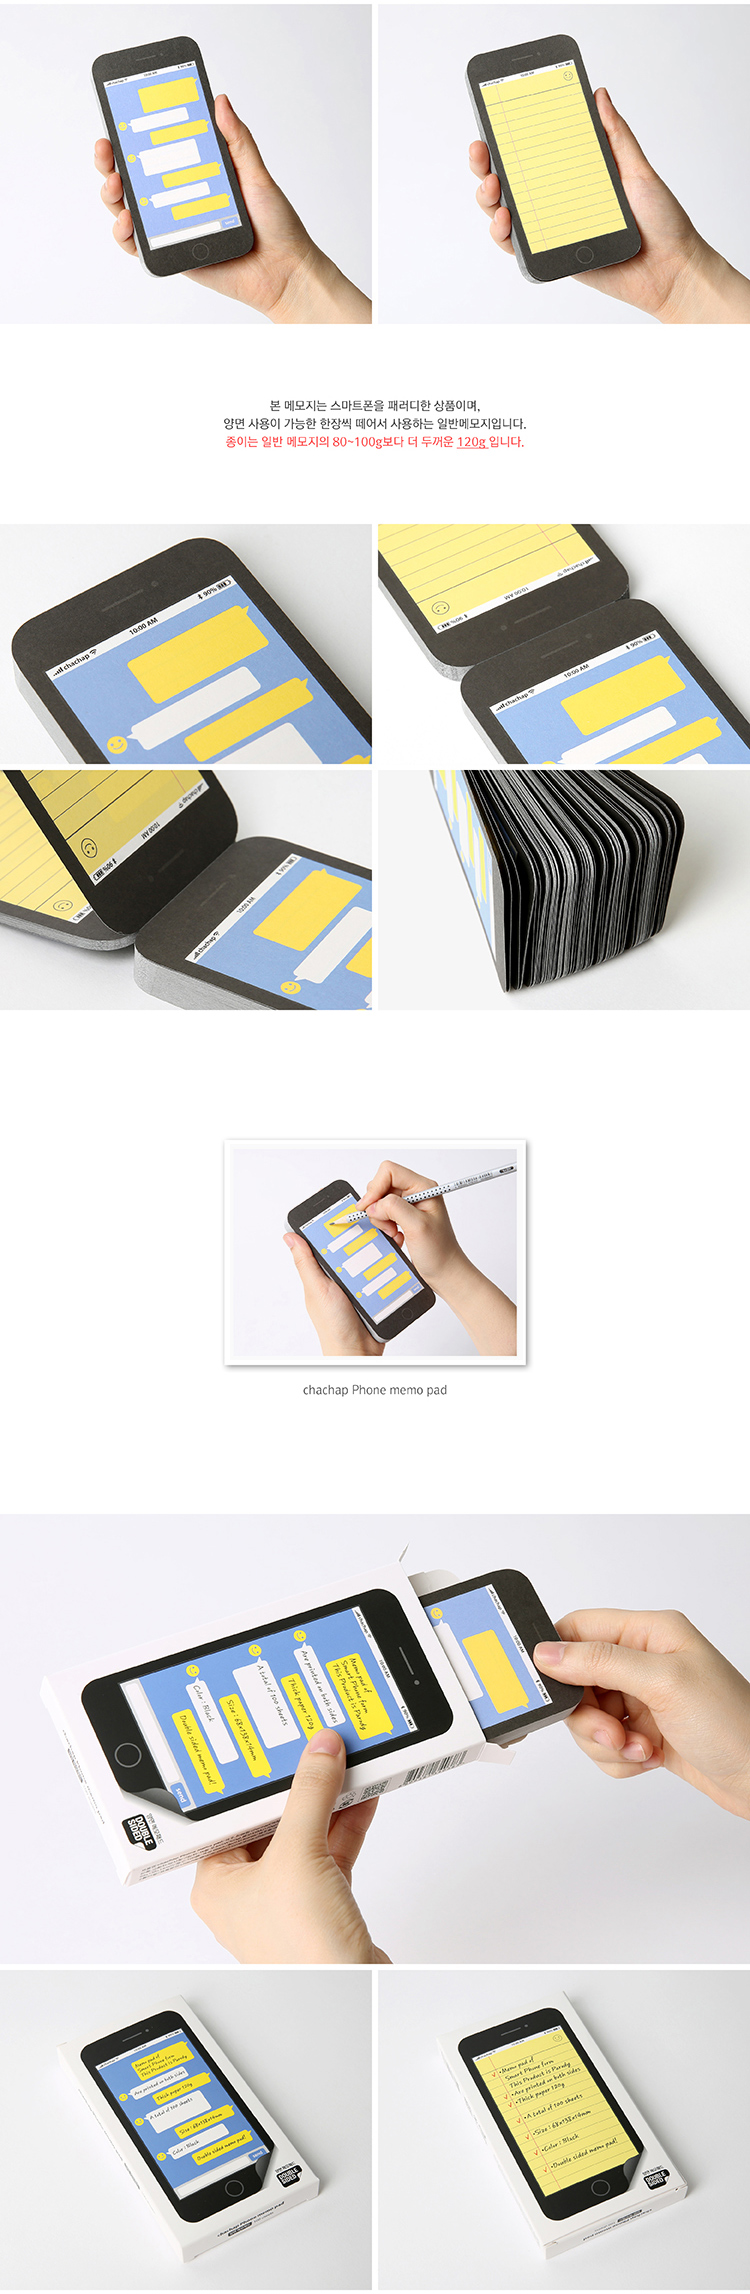 chachap Phone memo pad 4,500원 - 캐찹 디자인문구, 노트/메모, 메모지, 메모패드 바보사랑 chachap Phone memo pad 4,500원 - 캐찹 디자인문구, 노트/메모, 메모지, 메모패드 바보사랑